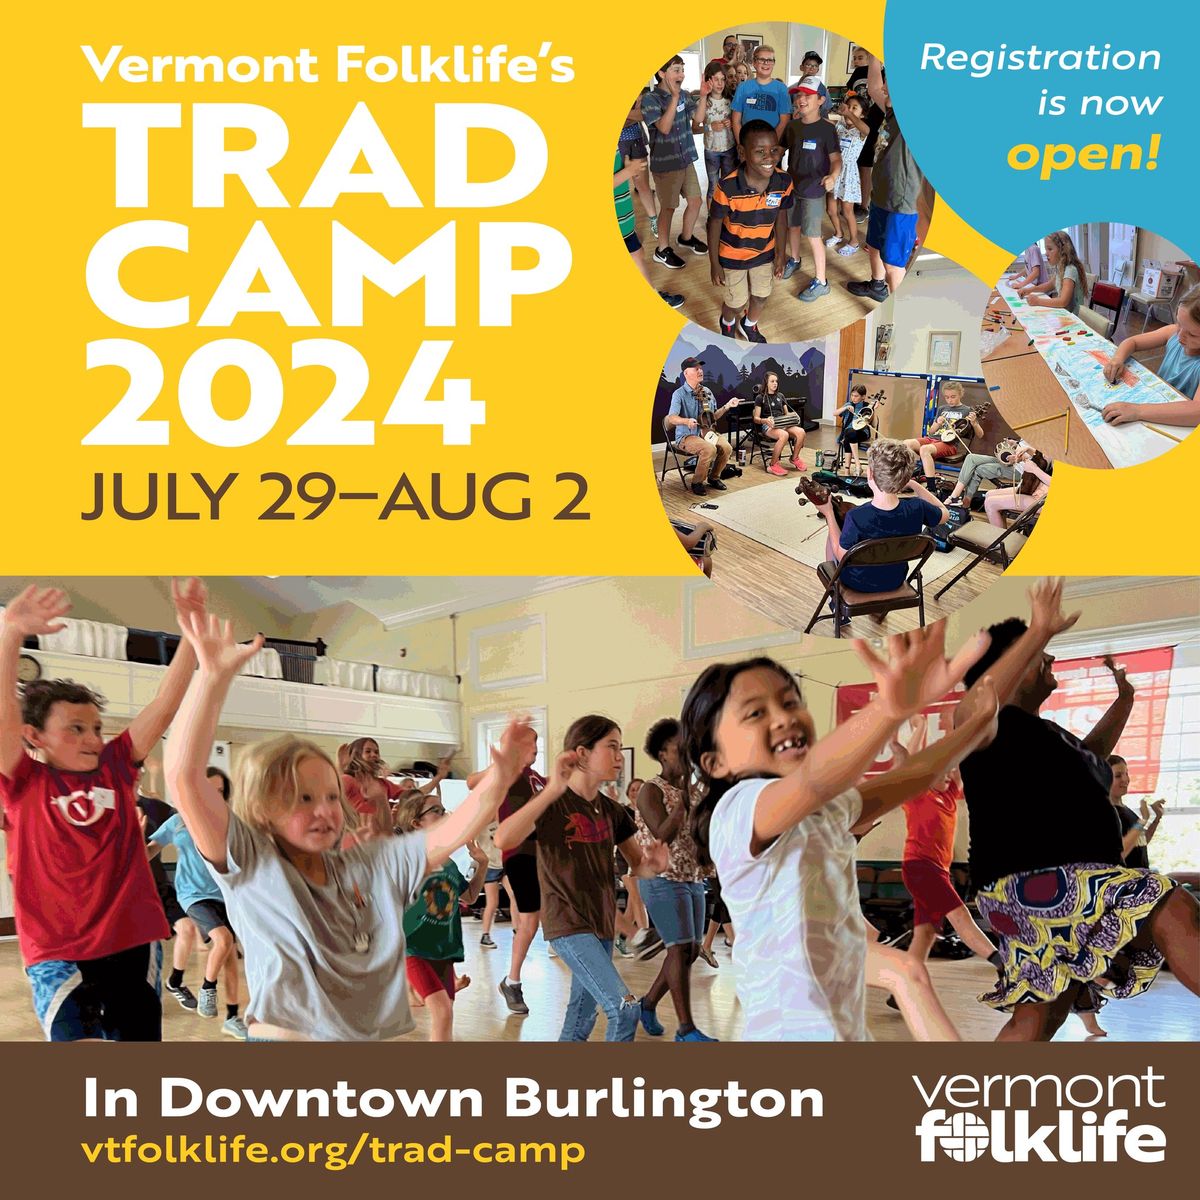 Vermont Folklife's Trad Camp 